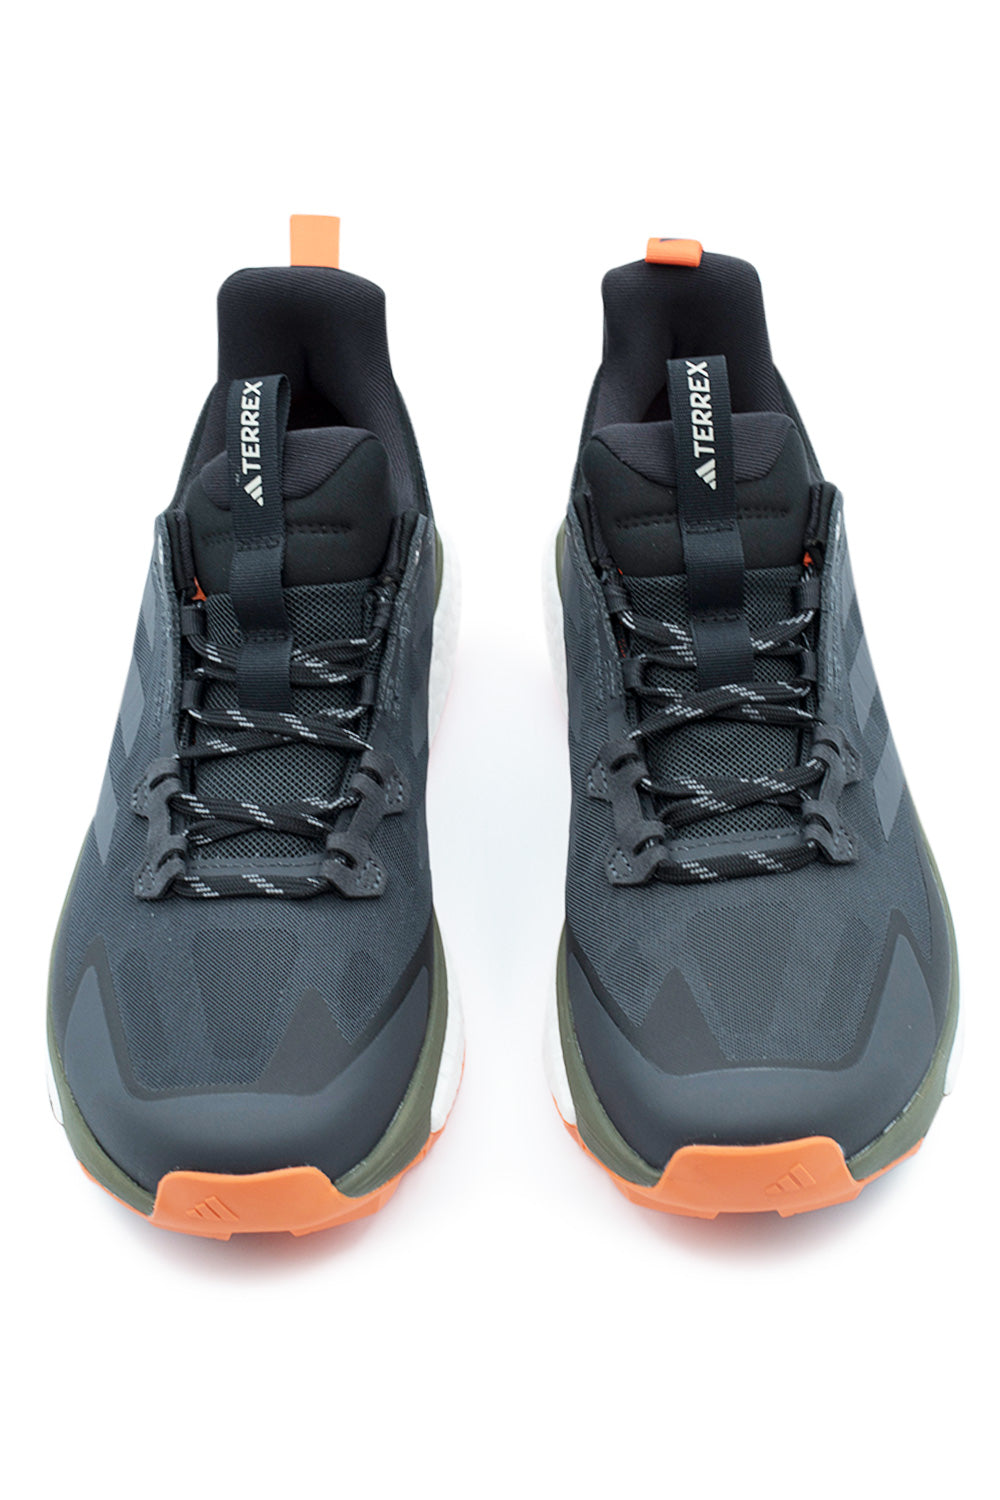 Adidas Terrex Free Hiker 2 Low Shoe Carbon / Grey Six / Core Black - BONKERS